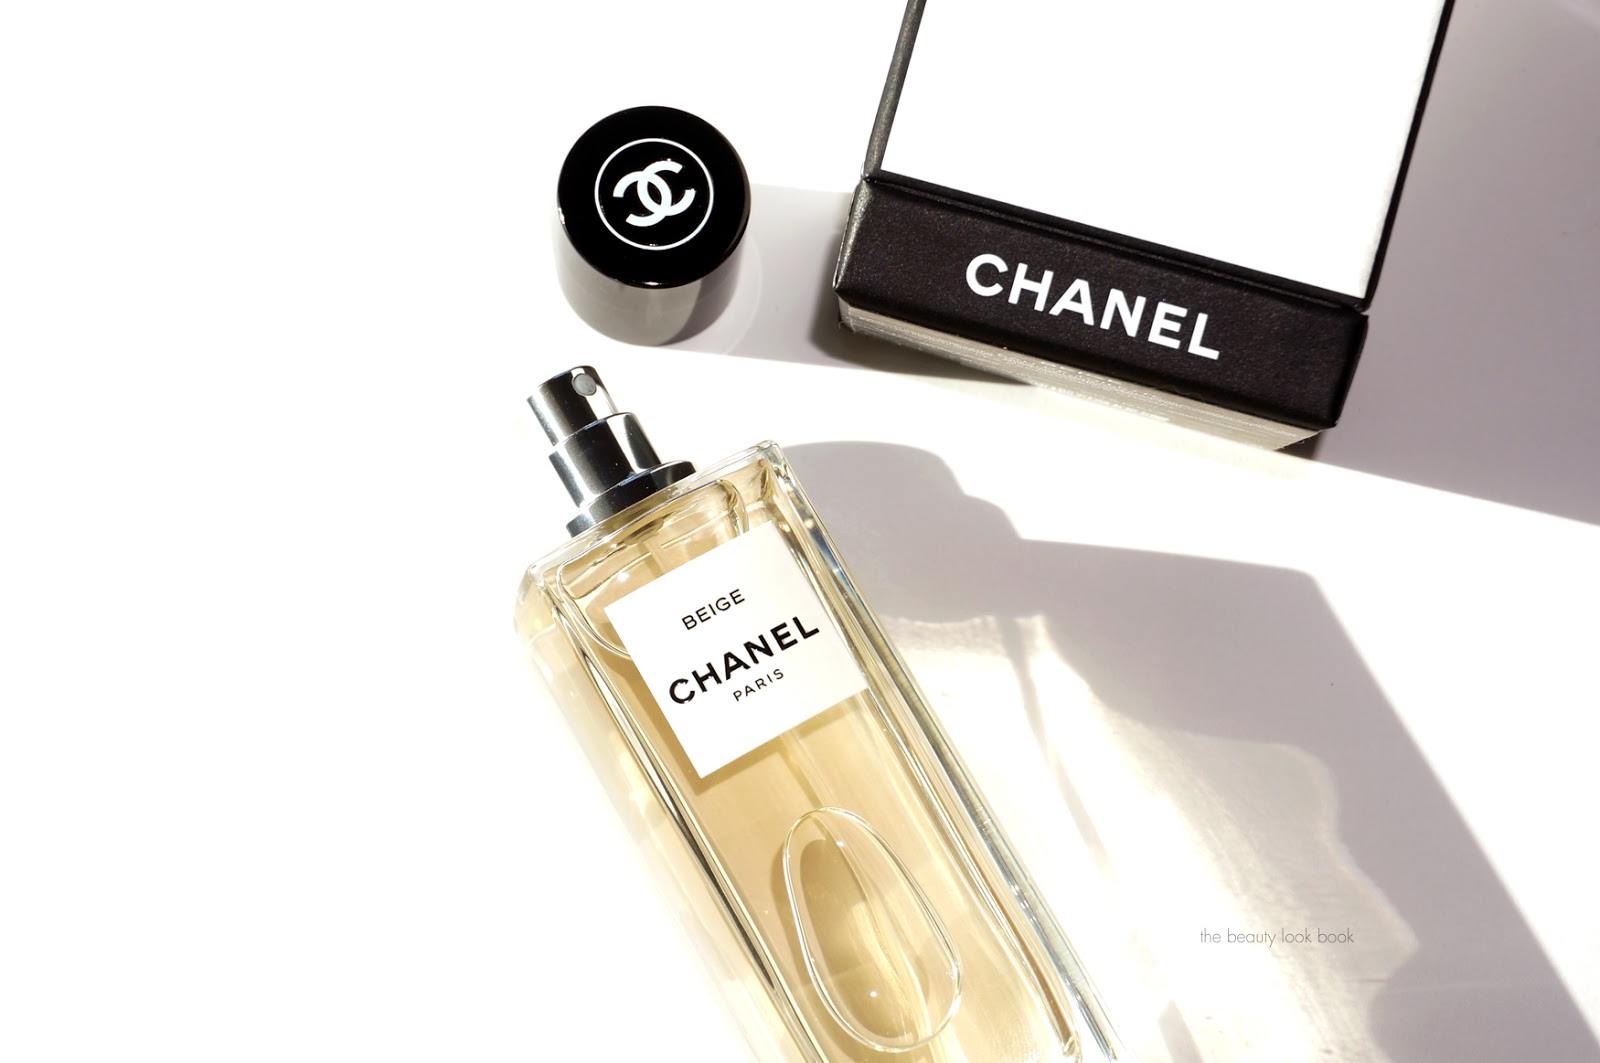 Les Exclusifs de Chanel in Beige - The Beauty Look Book